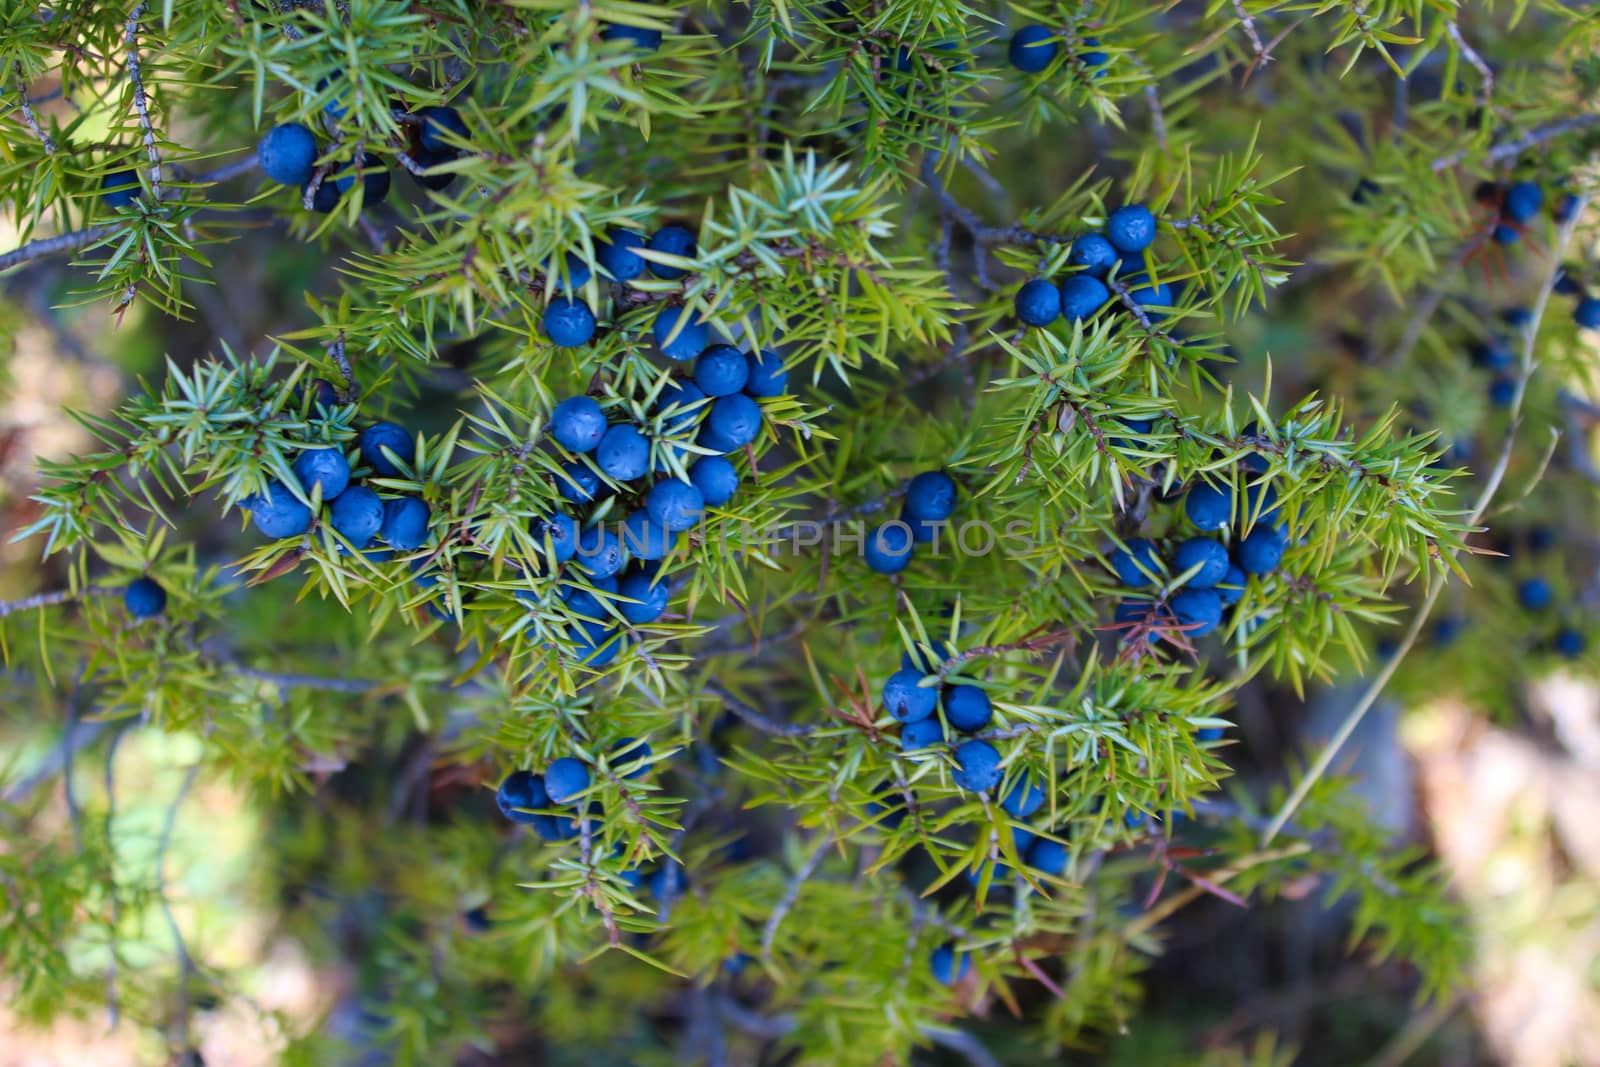 Lots of ripe navy blue juniper berries all over the branch between the green needles. Juniperus communis fruit. Bjelasnica Mountain, Bosnia and Herzegovina.